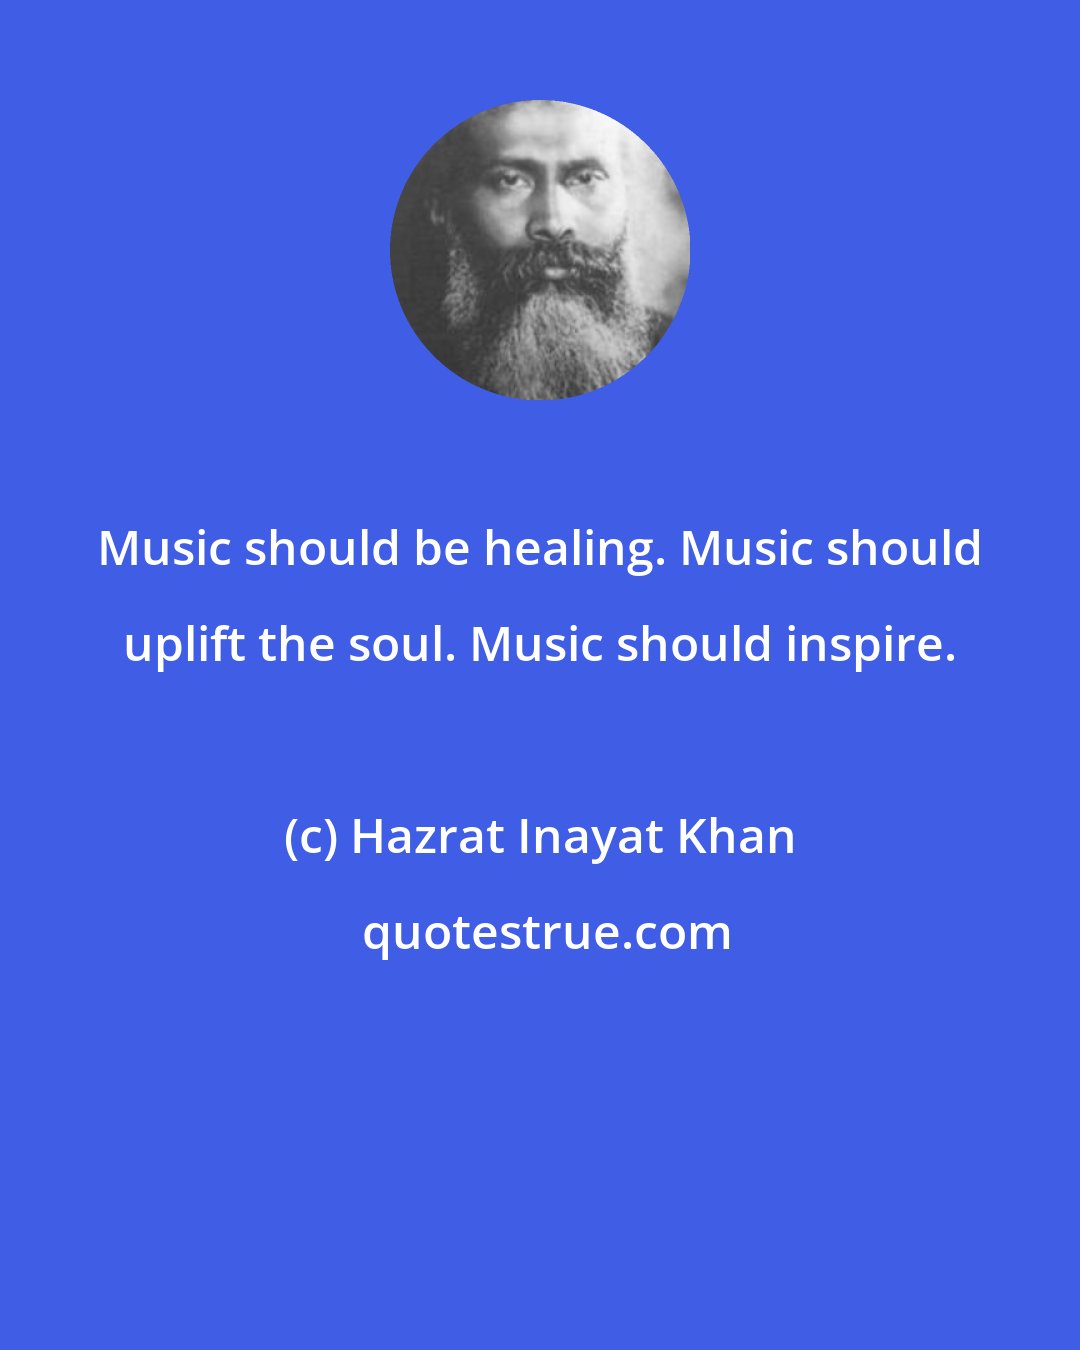 Hazrat Inayat Khan: Music should be healing. Music should uplift the soul. Music should inspire.